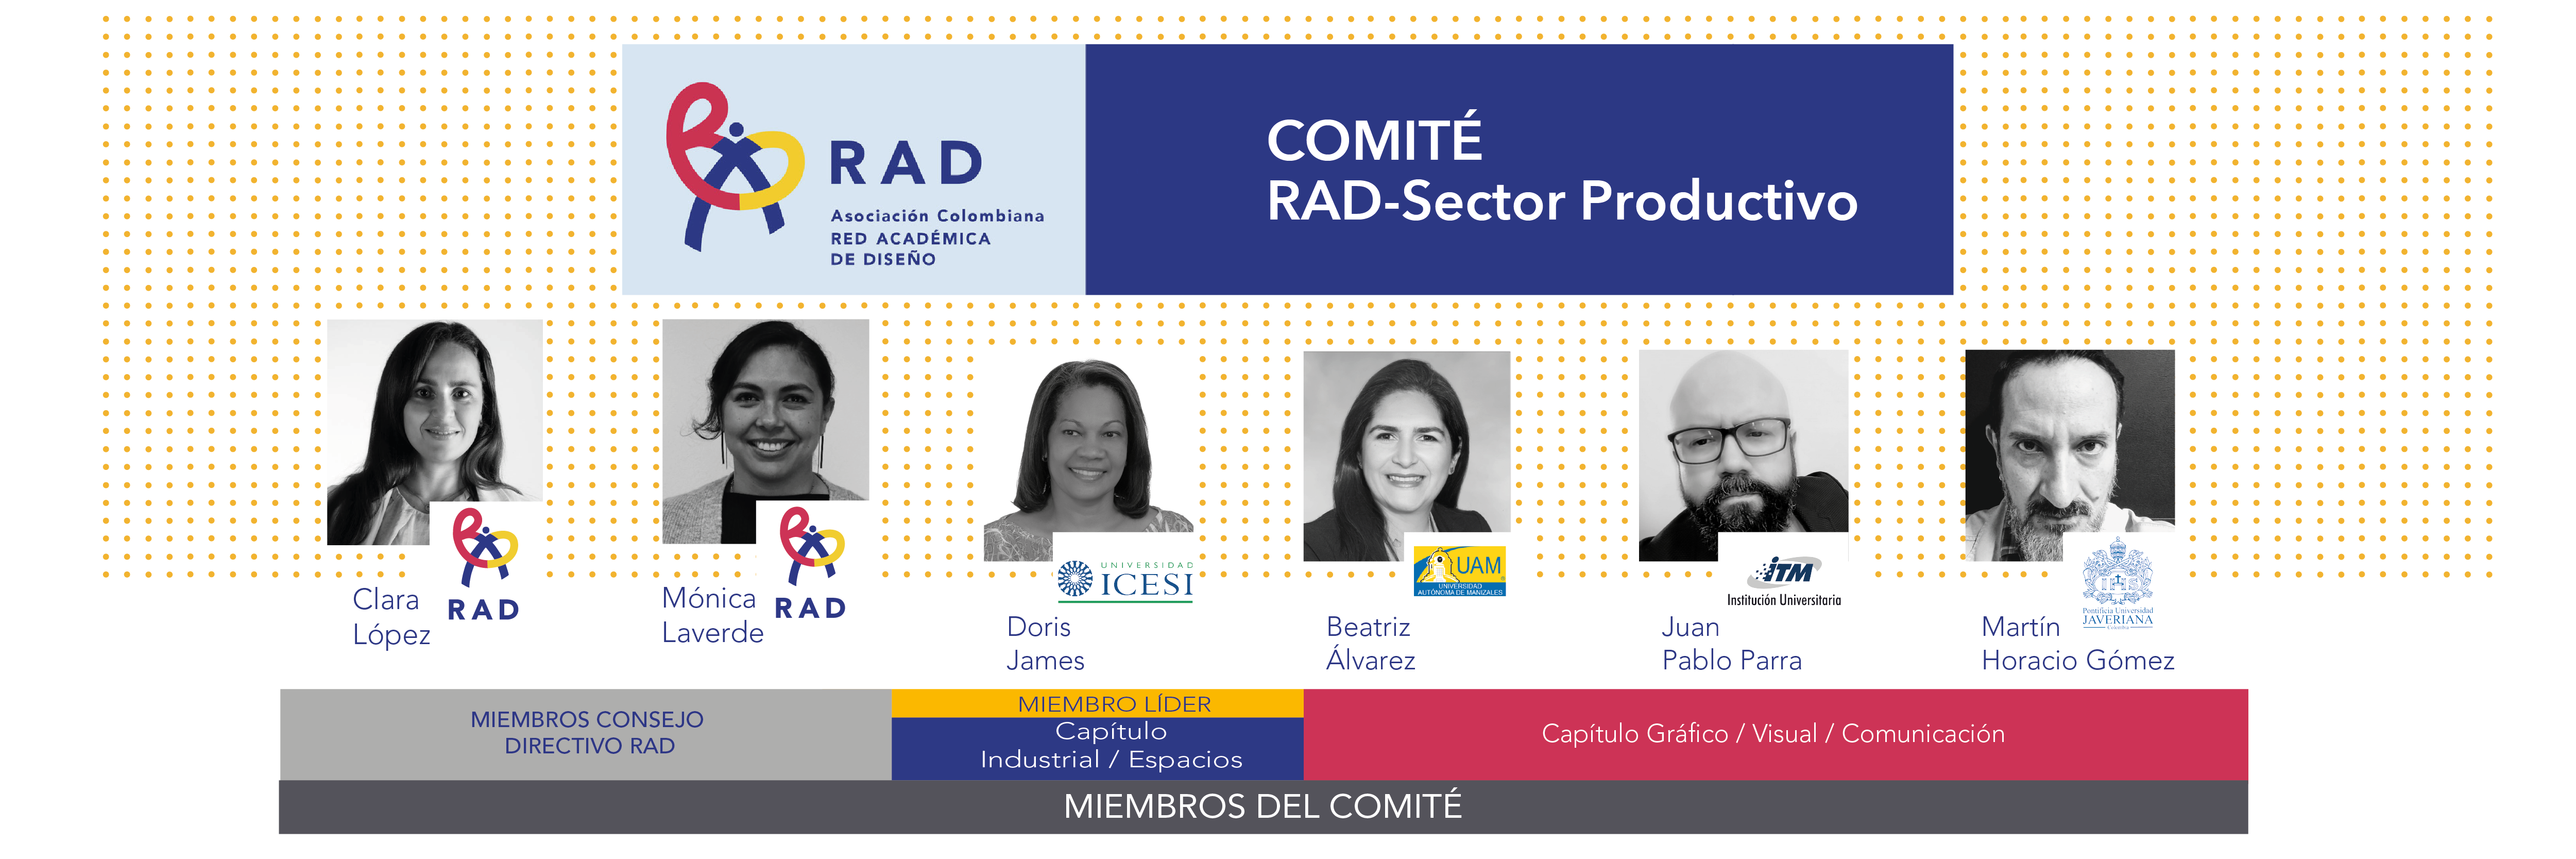 Comité RAD-Sector Productivo